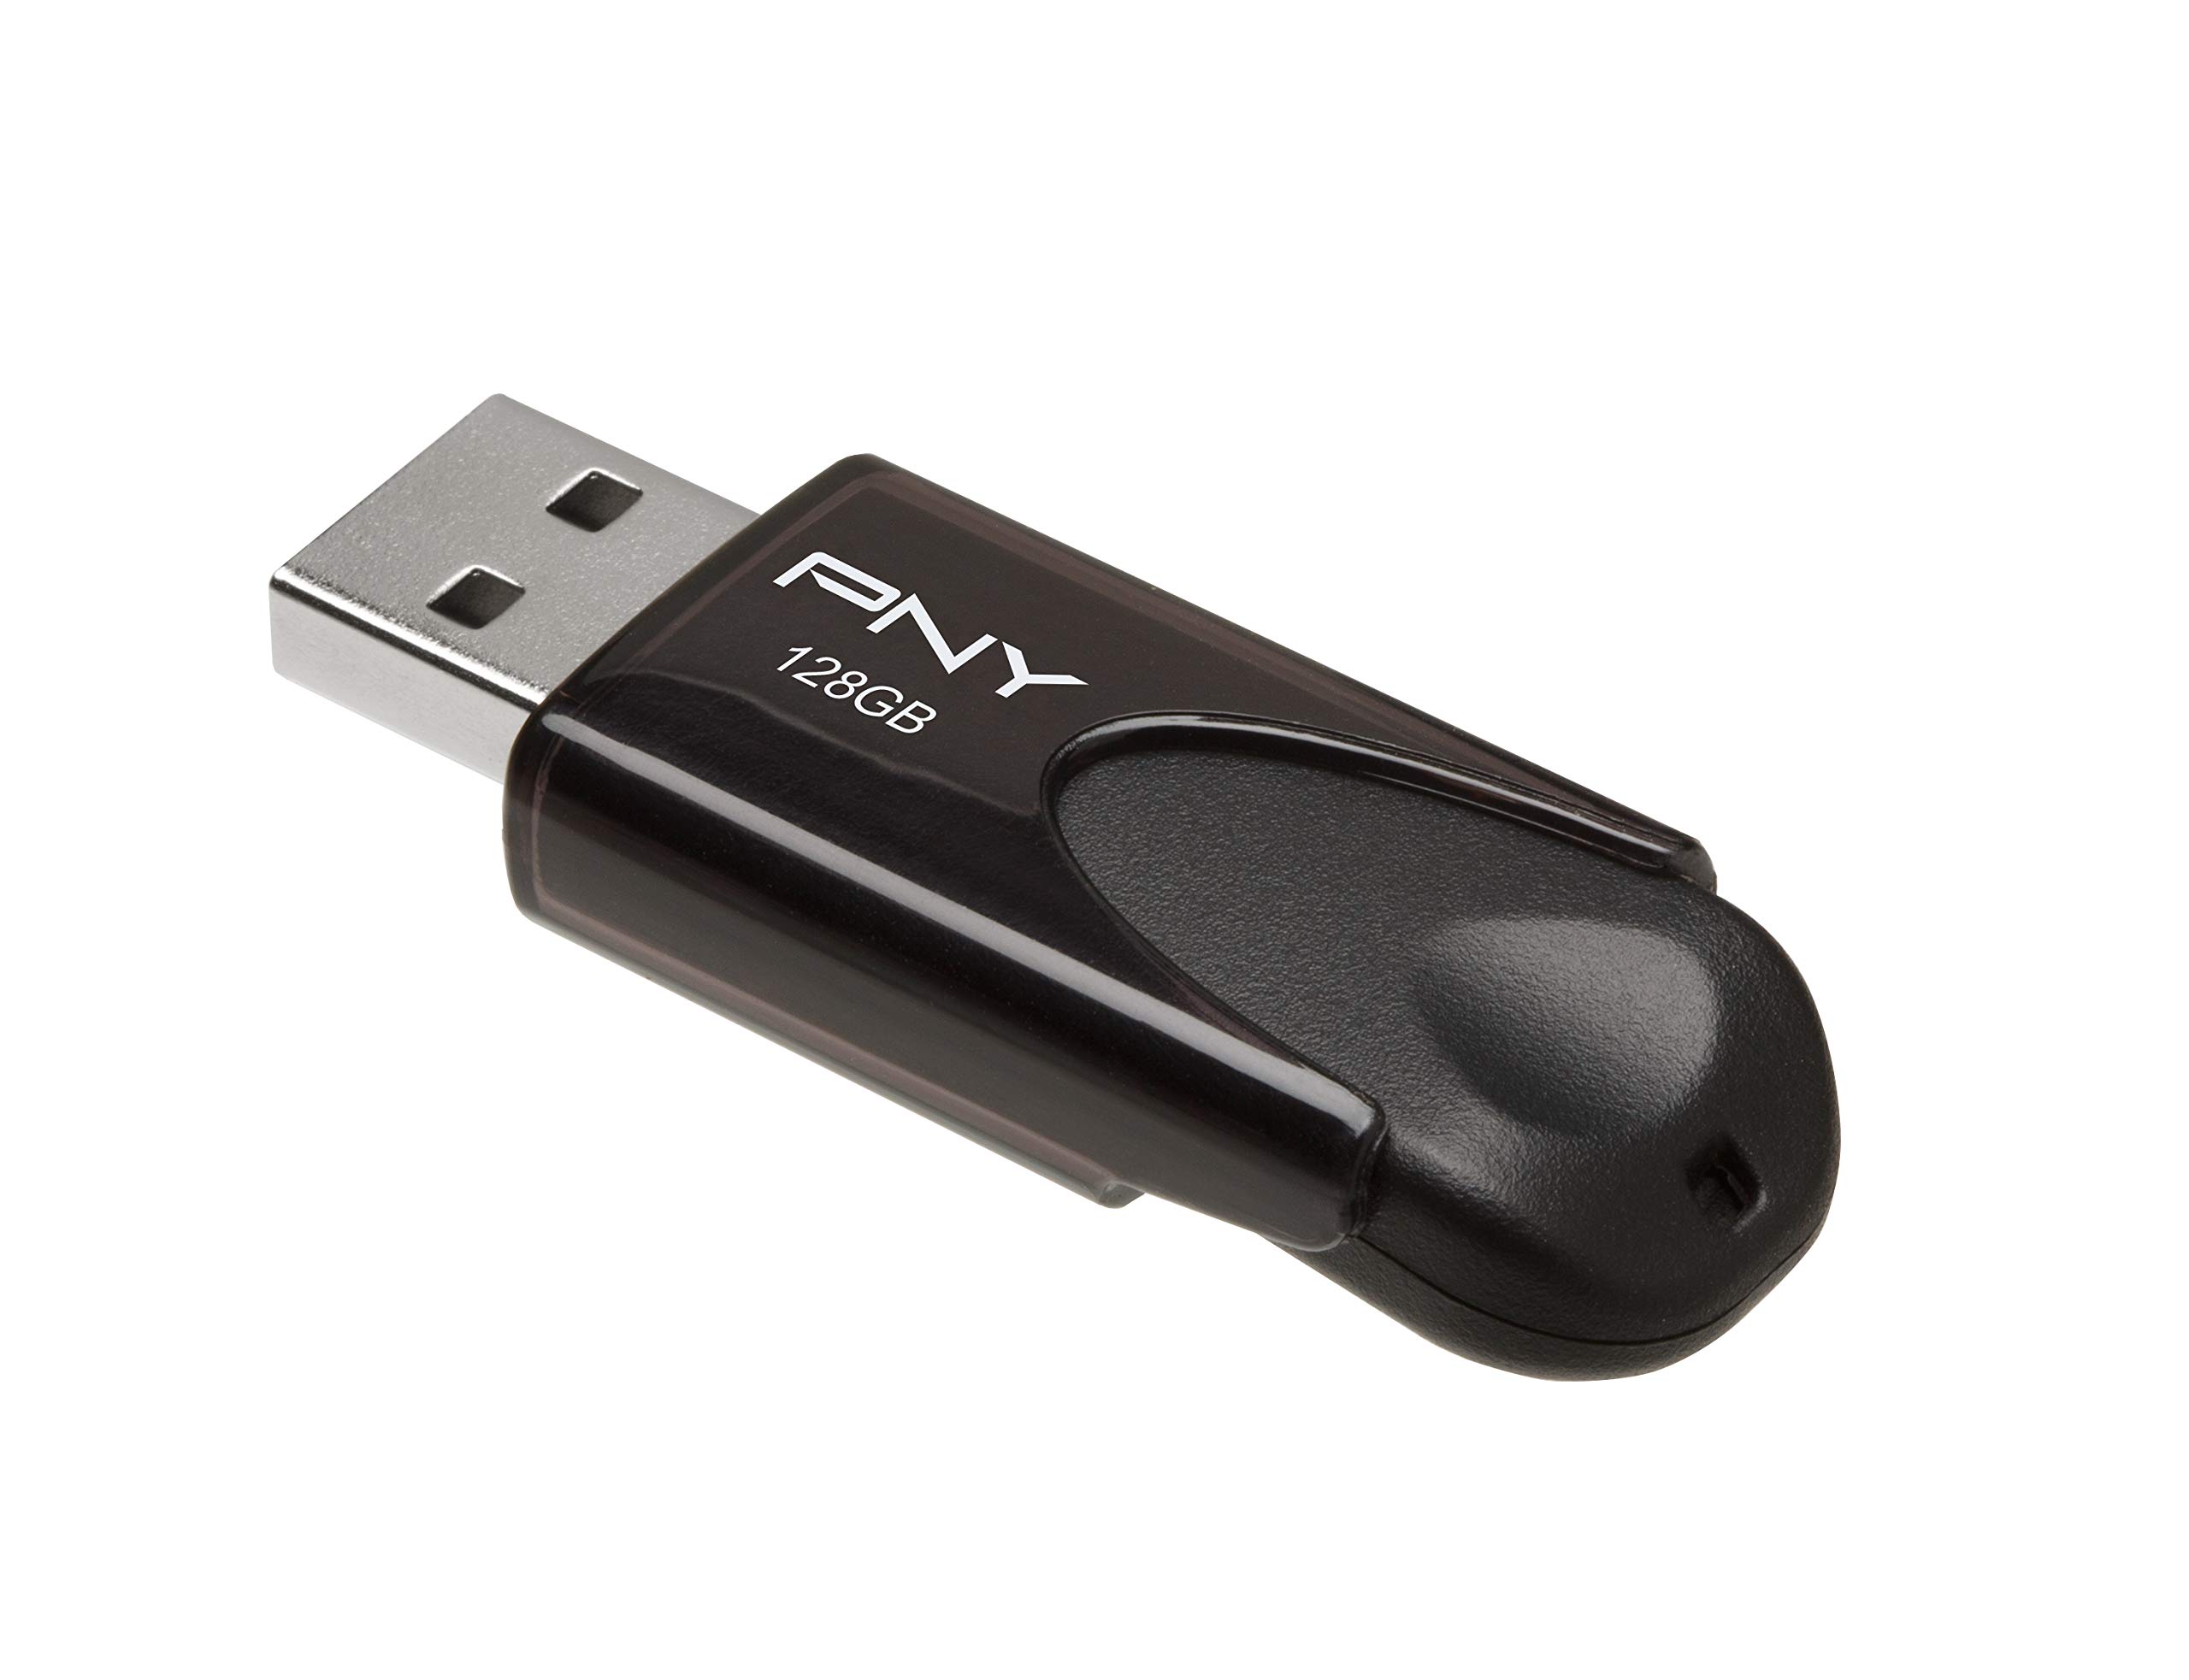 128GB PNY Attaché 4 USB 2.0 Thumb Flash Drive (Black) $5.99 + Free Shipping w/ Prime